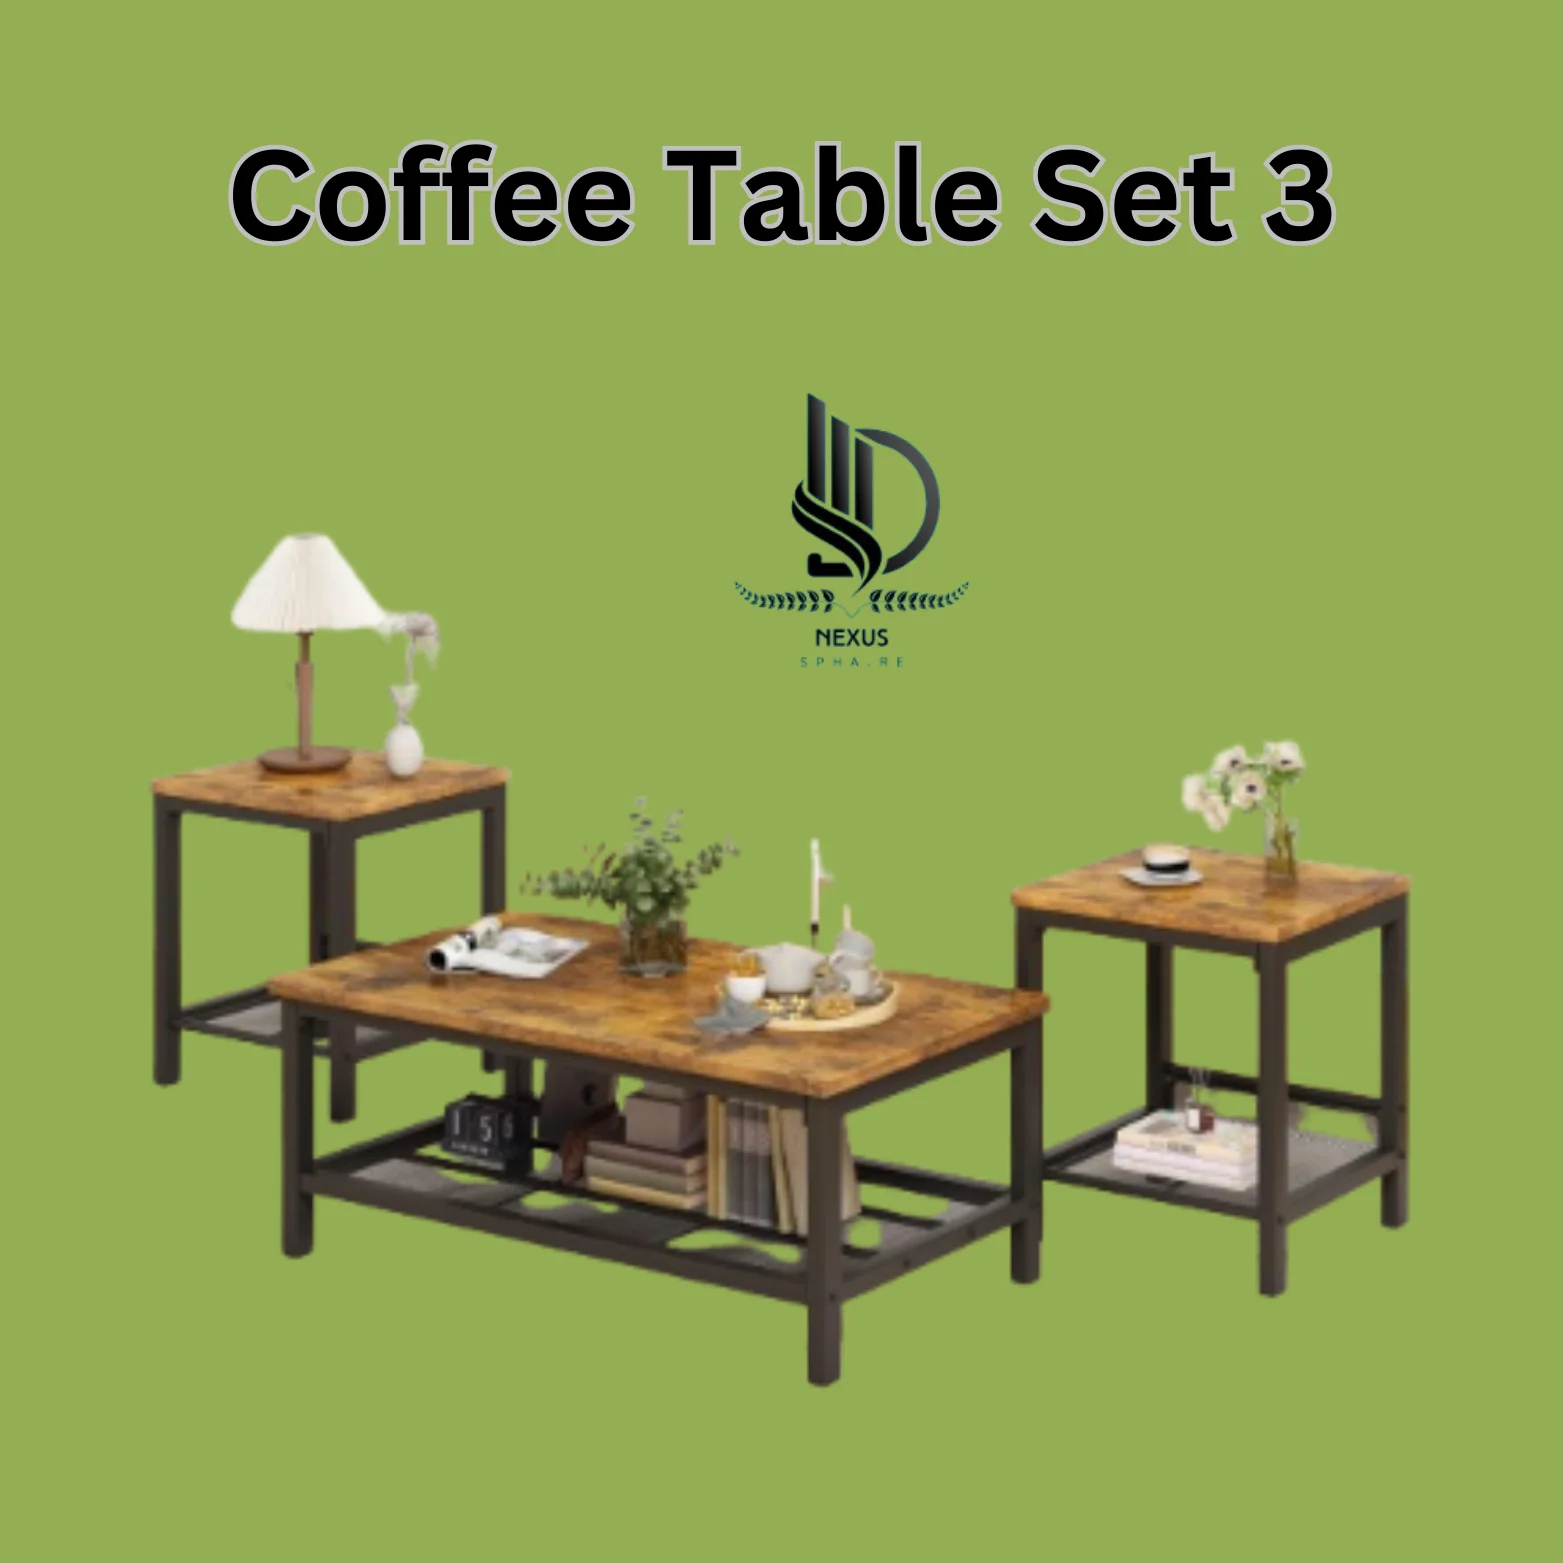 Coffee Table Set 3